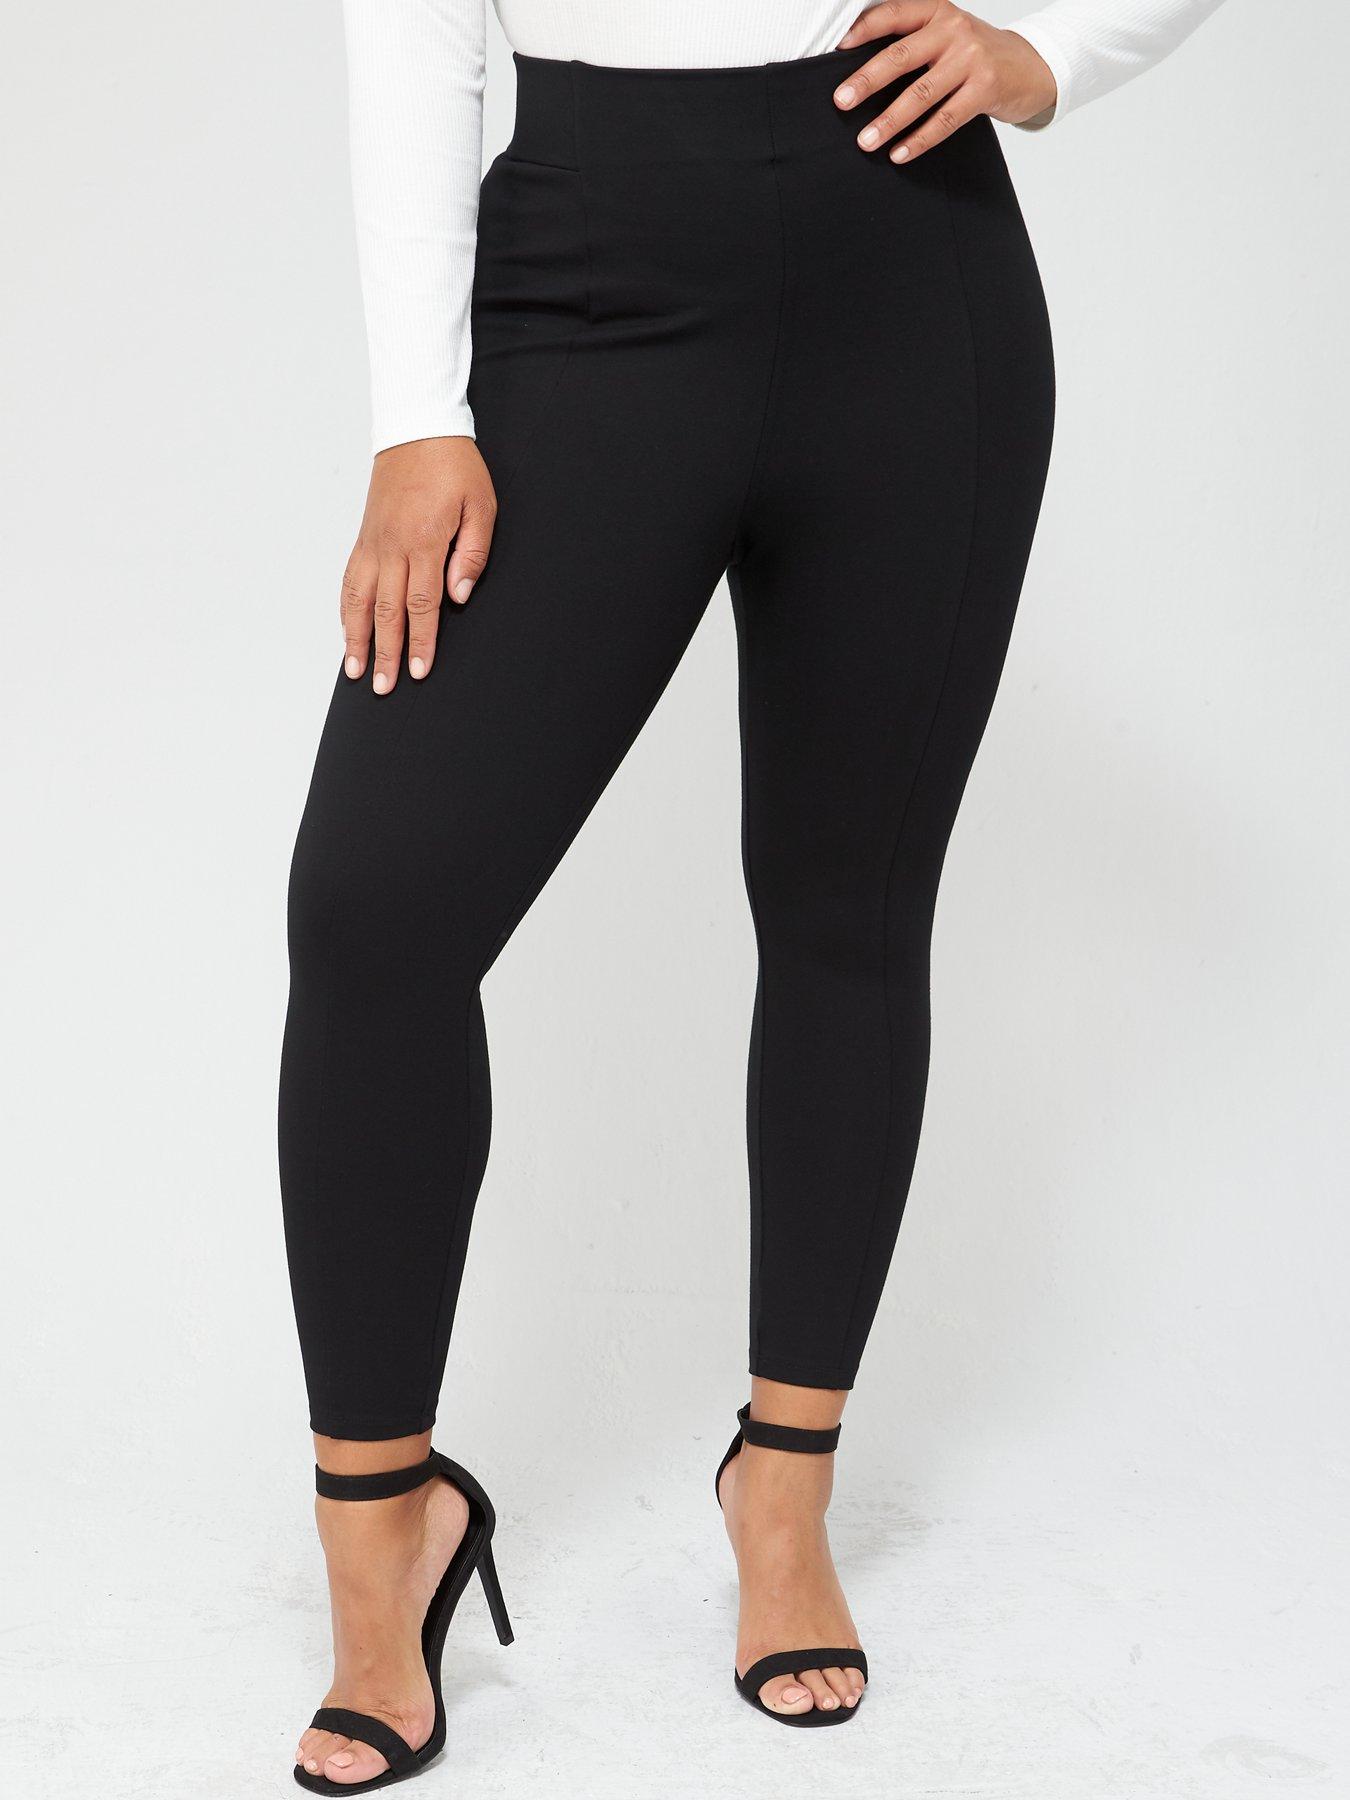 Girl Energy Zone Leggings, Size Medium 8-10, Black Activewear Yoga Pant  Bottom